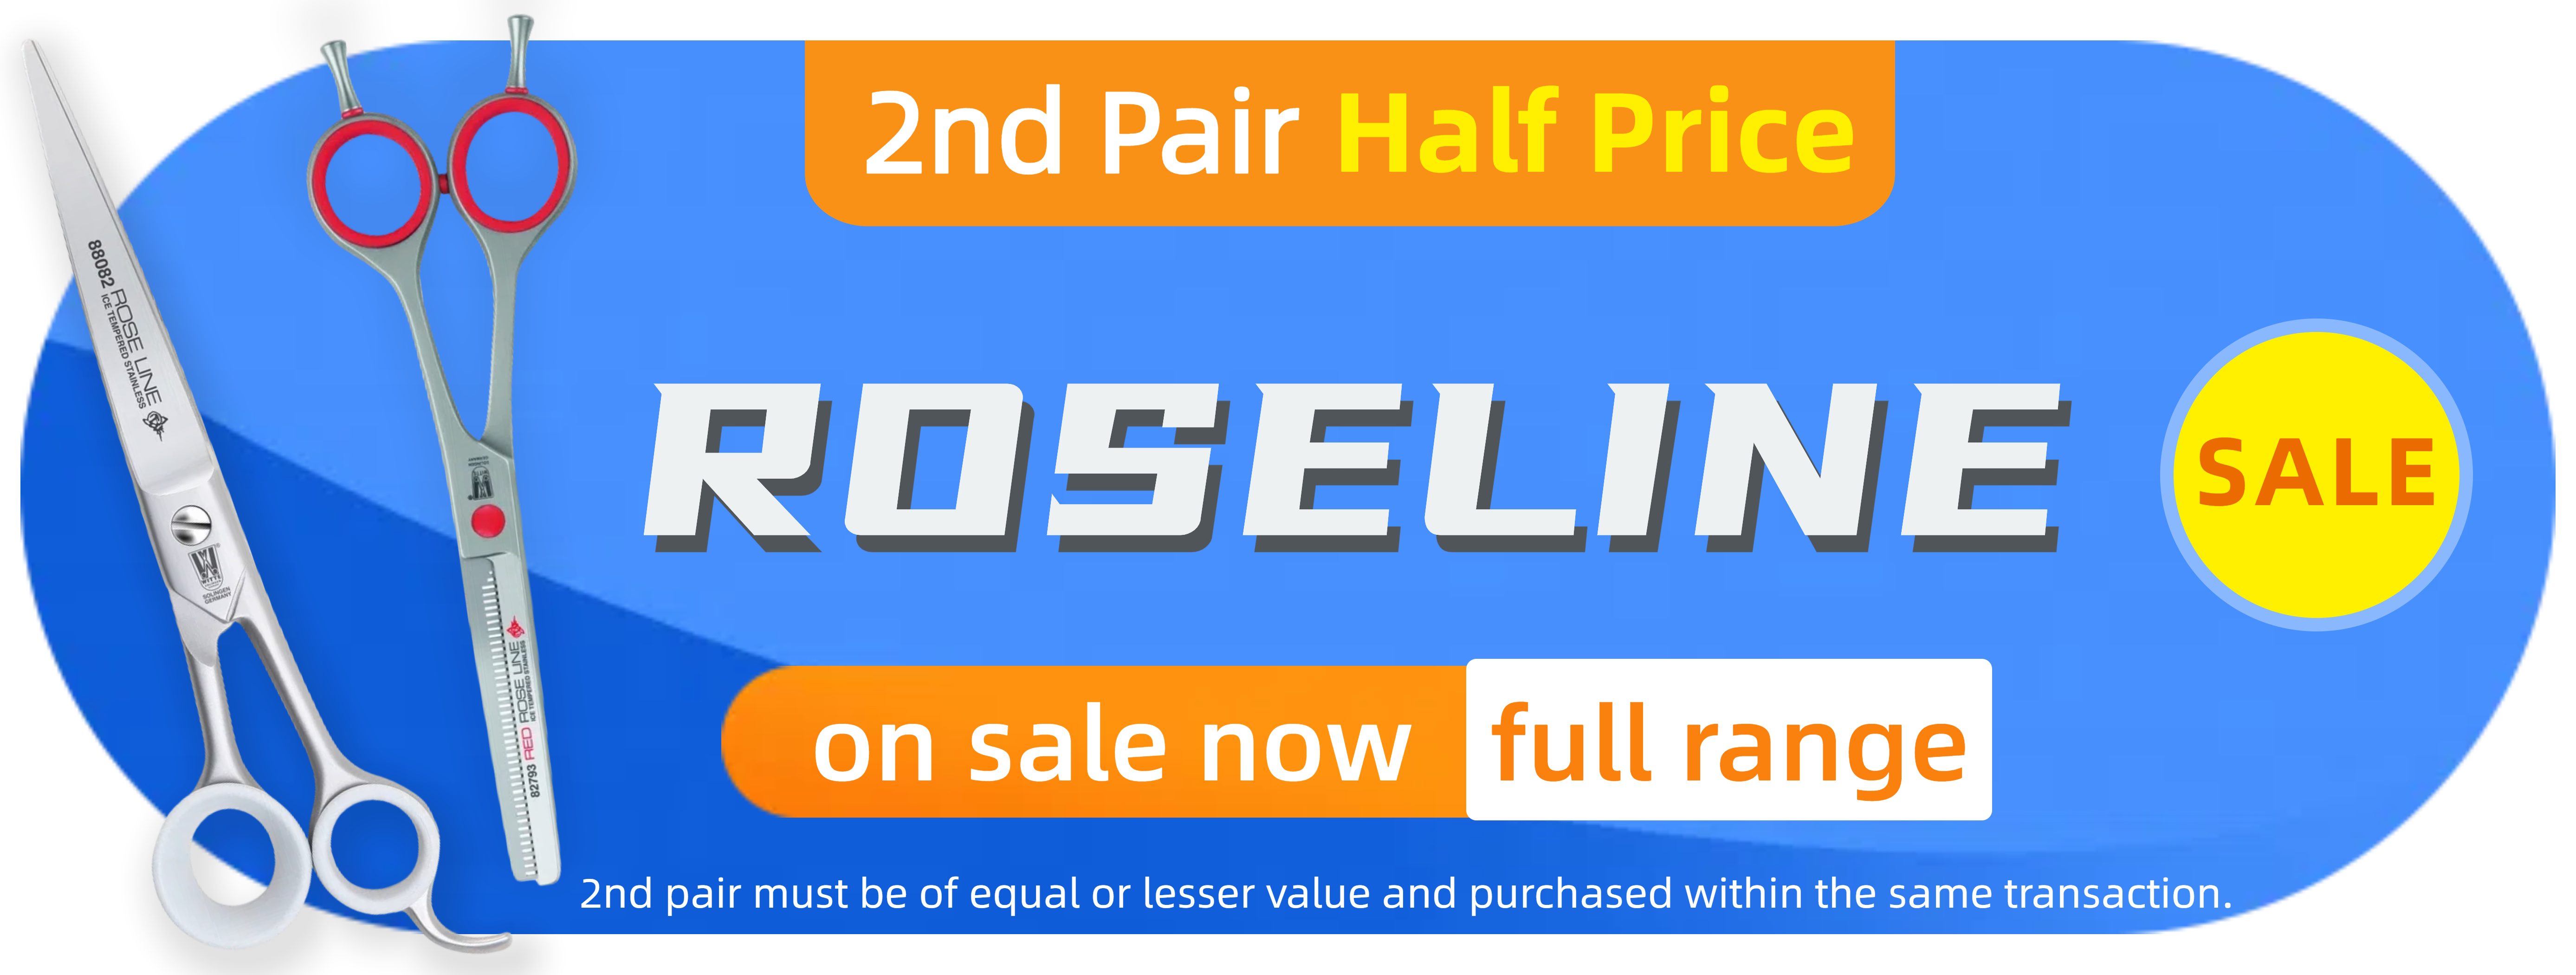 Roseline 2nd pair half price